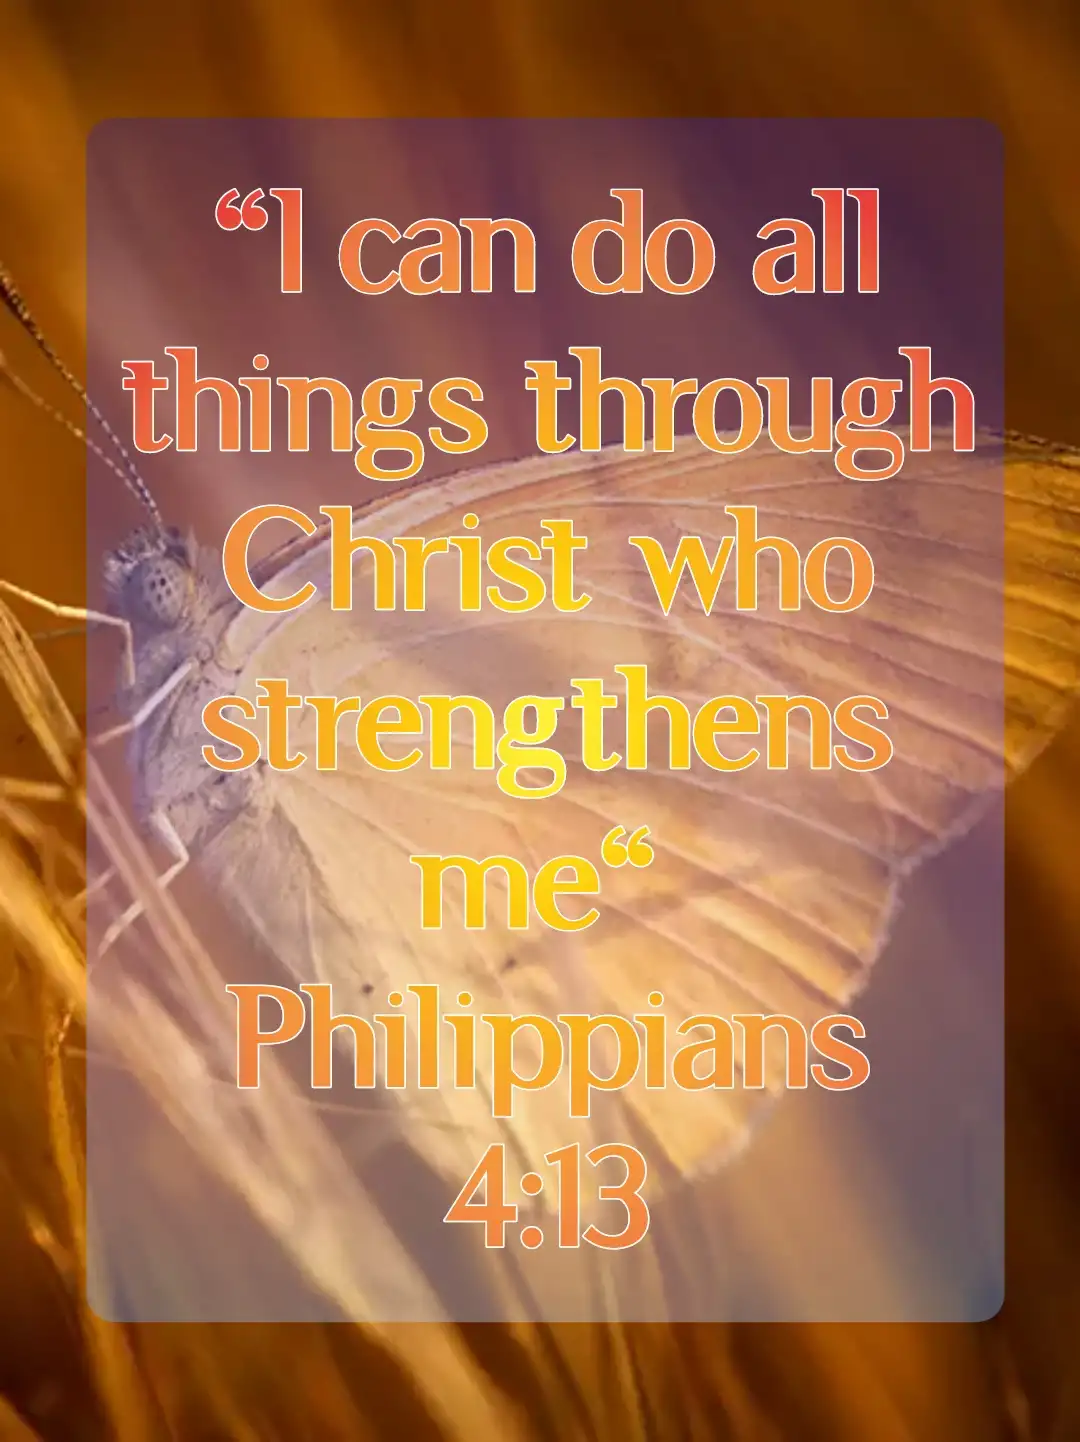 Bible Verses About Self Confidence (Philippians 4:13)